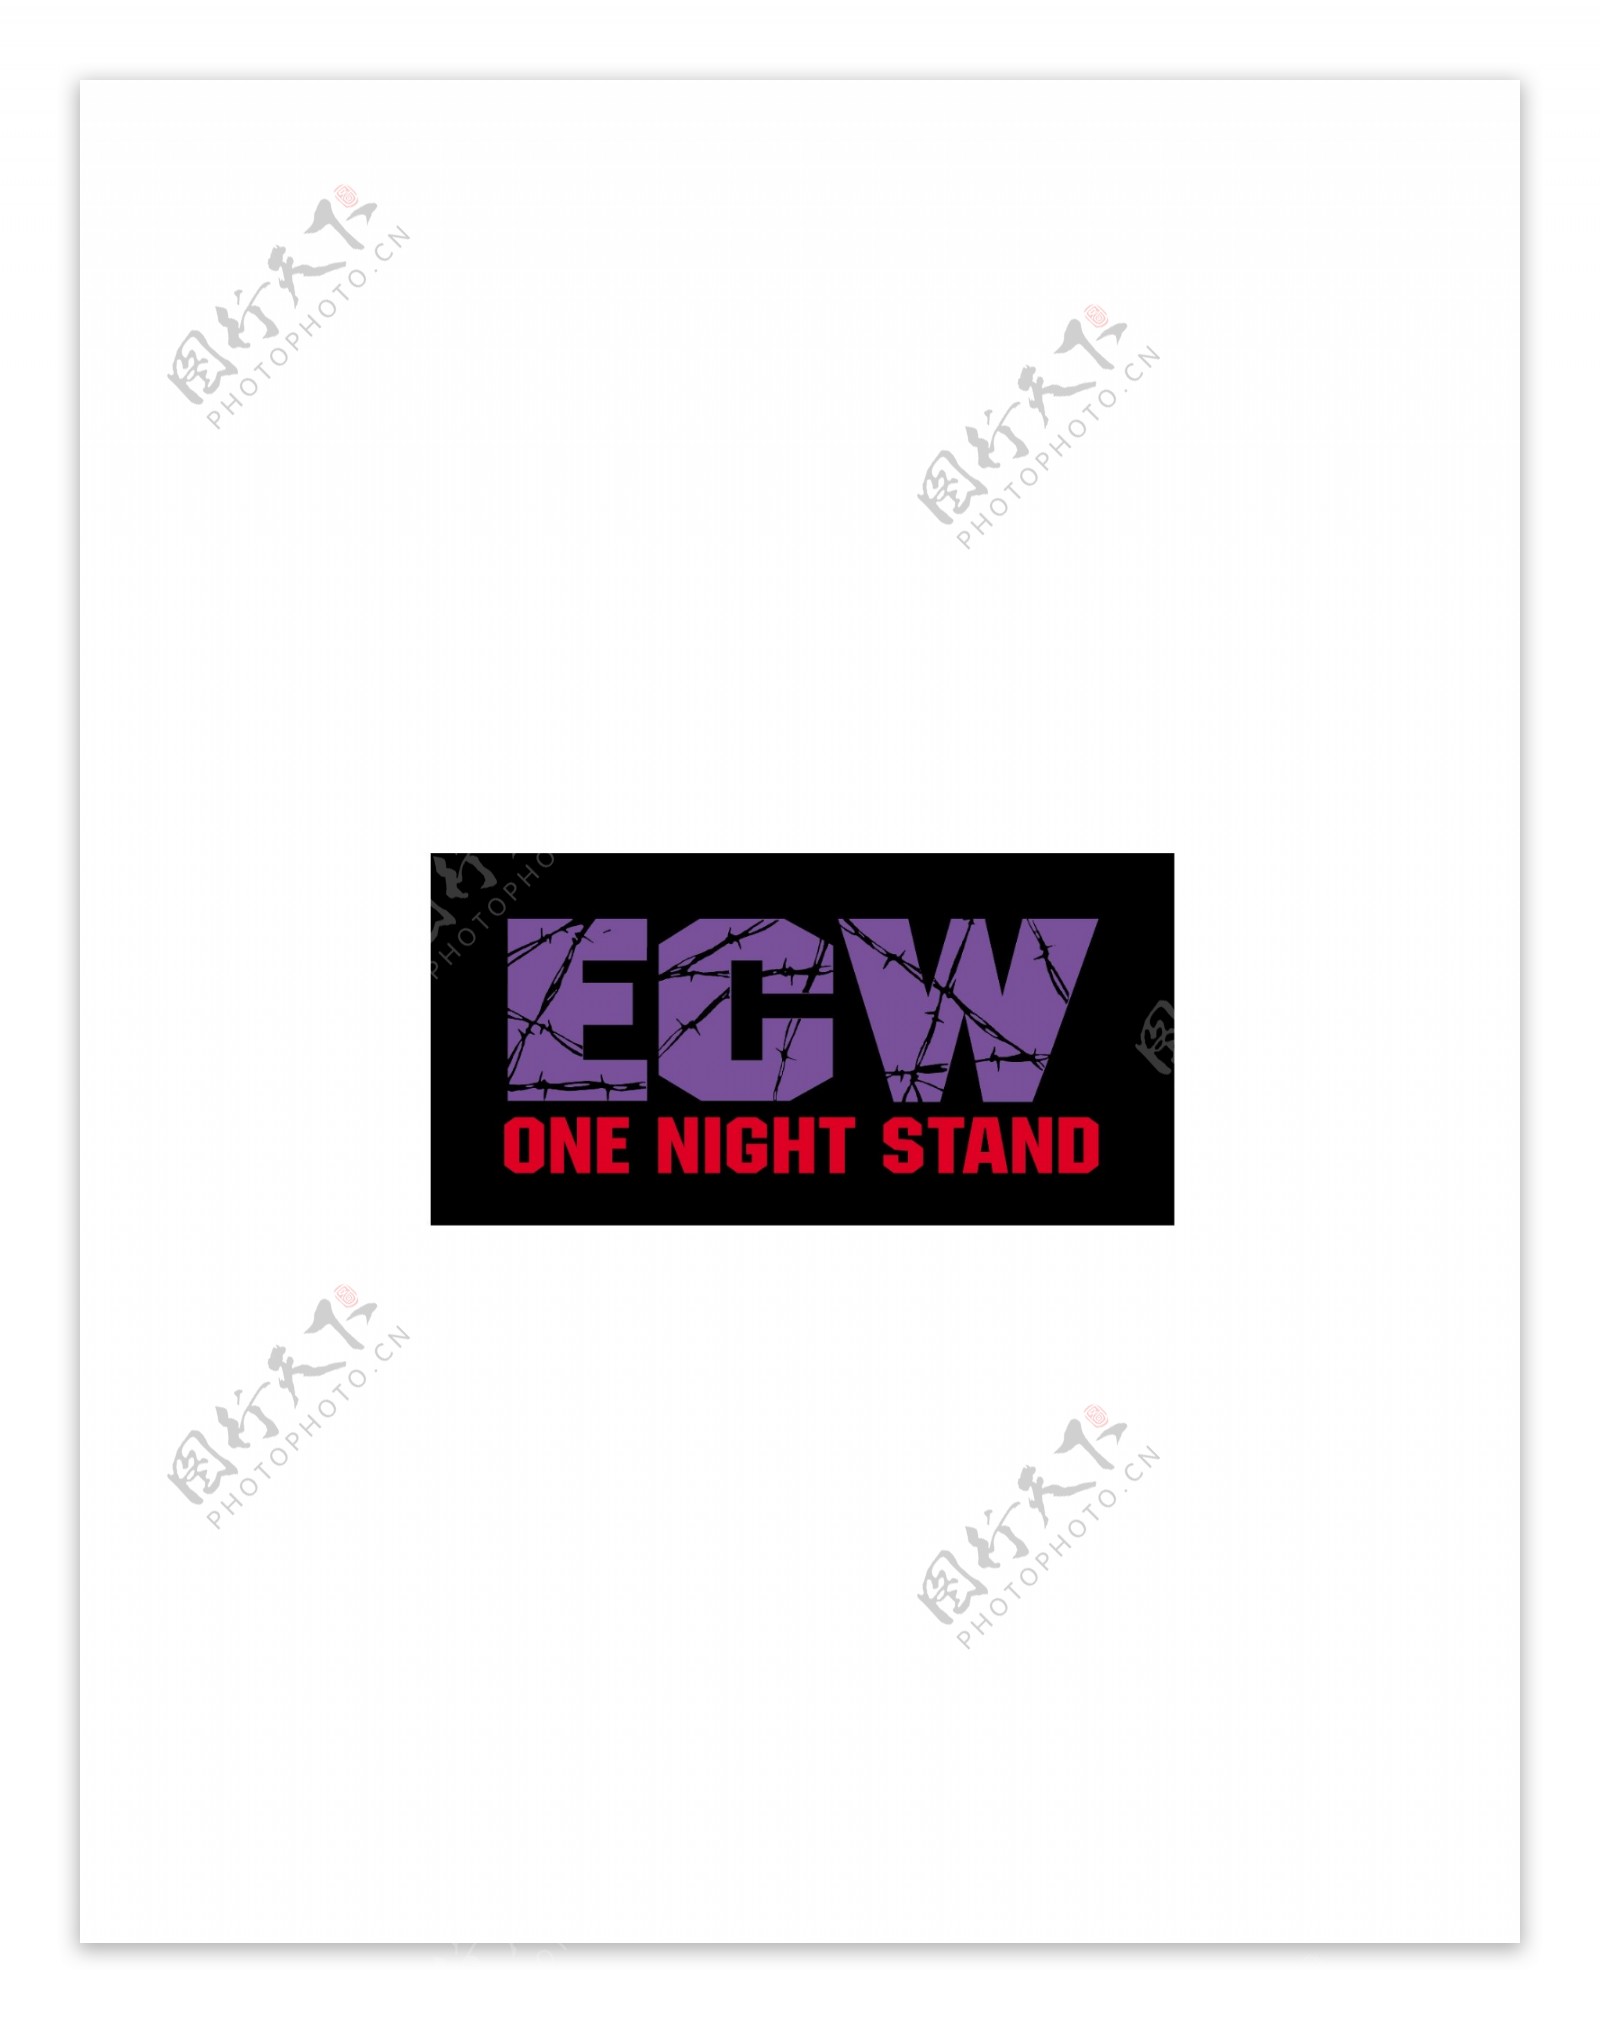 ECWOneNightStandlogo设计欣赏ECWOneNightStand体育比赛标志下载标志设计欣赏